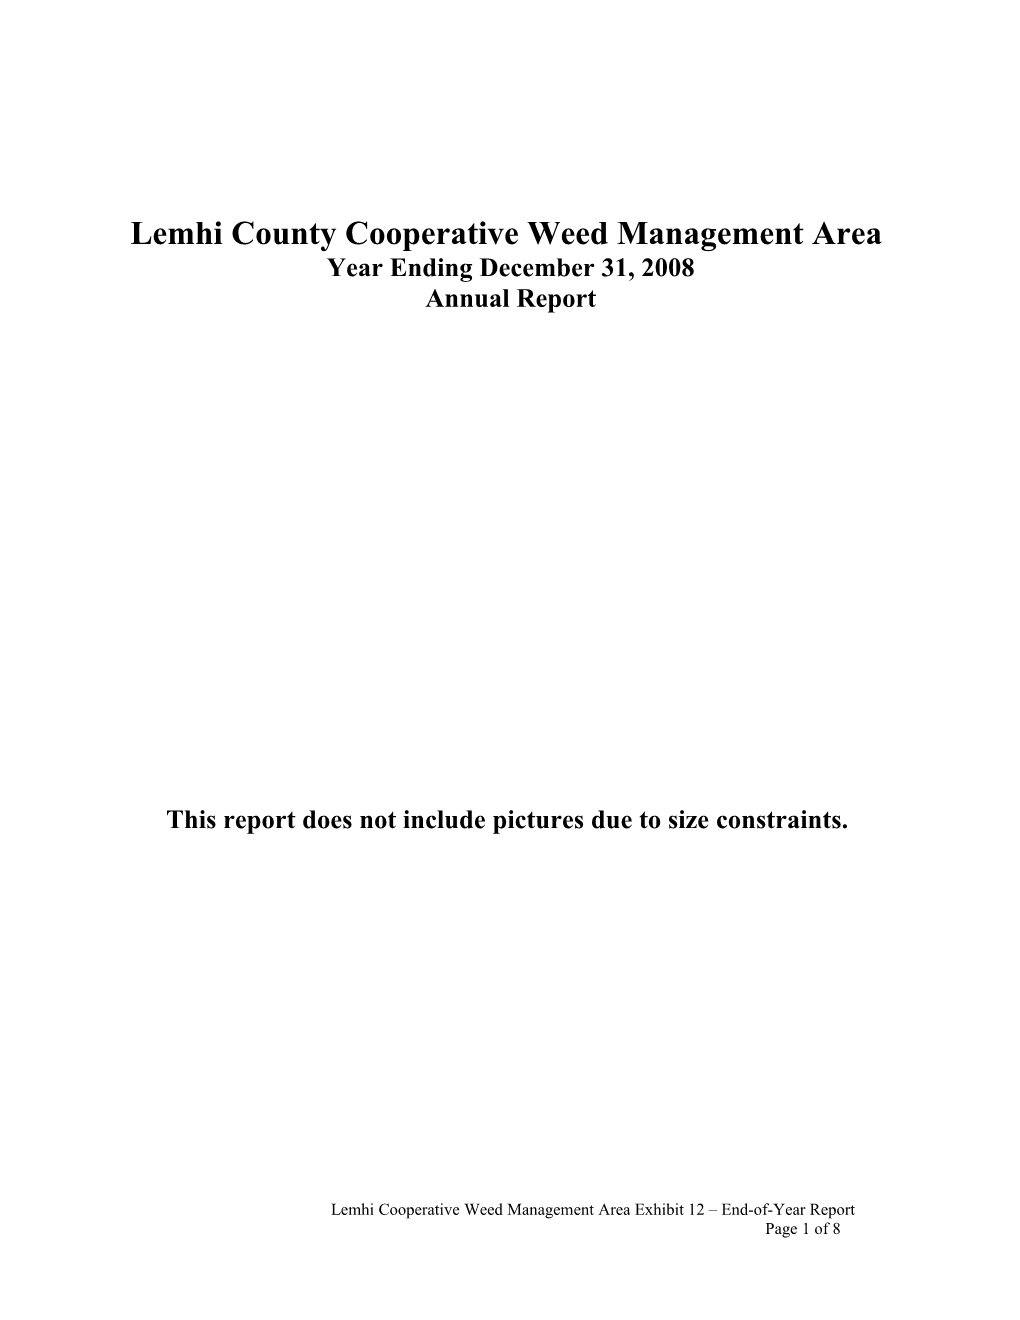 2004 Lemhi Cwma Annual Report